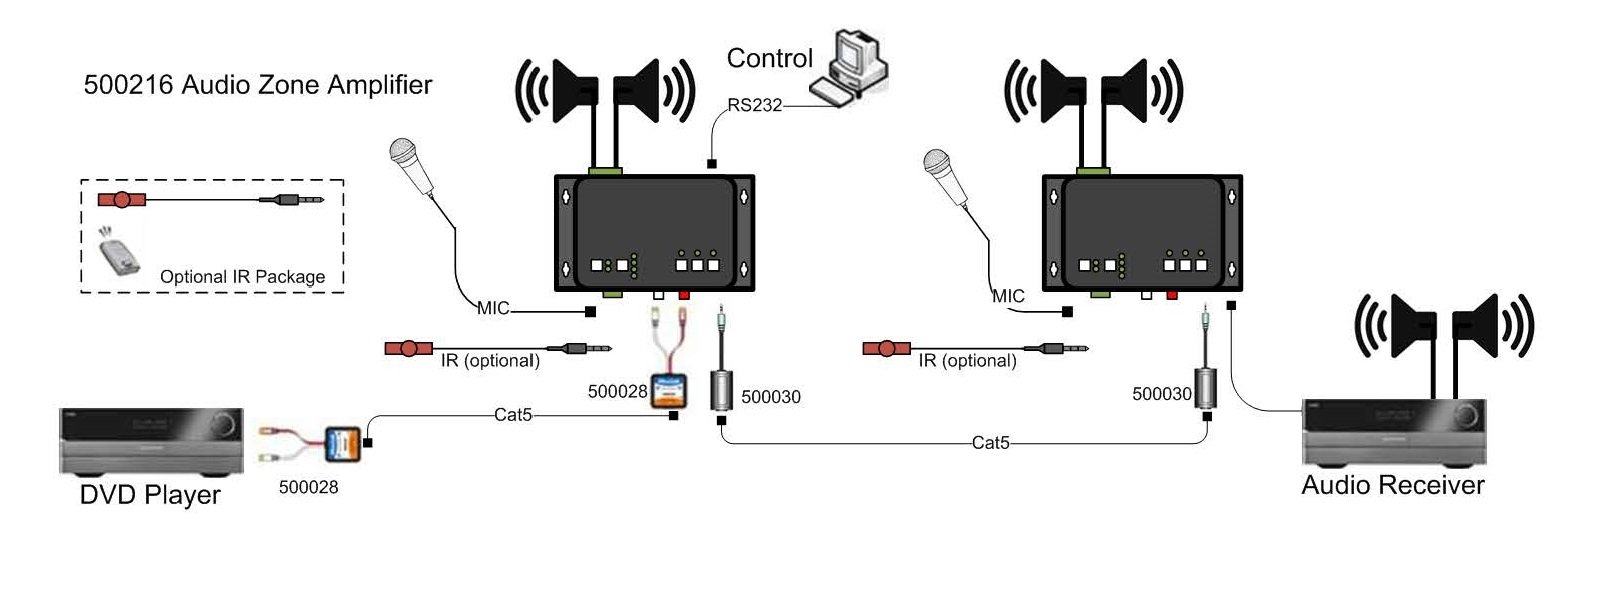 Audio Zone Amplifier - Muxlab